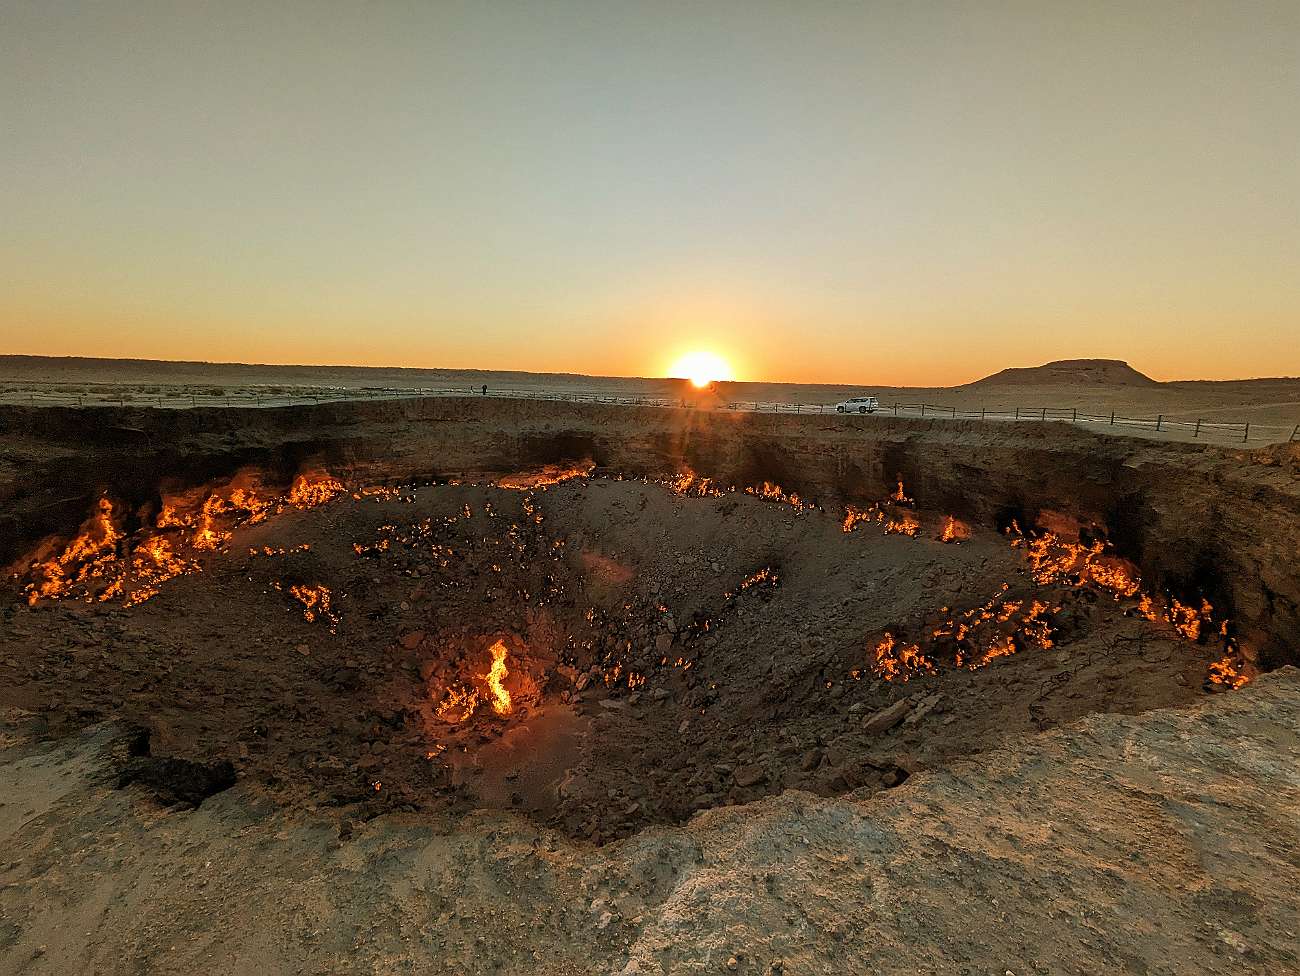 The Gates of Hell (Darwaza, Turkmenistan) - at dawn